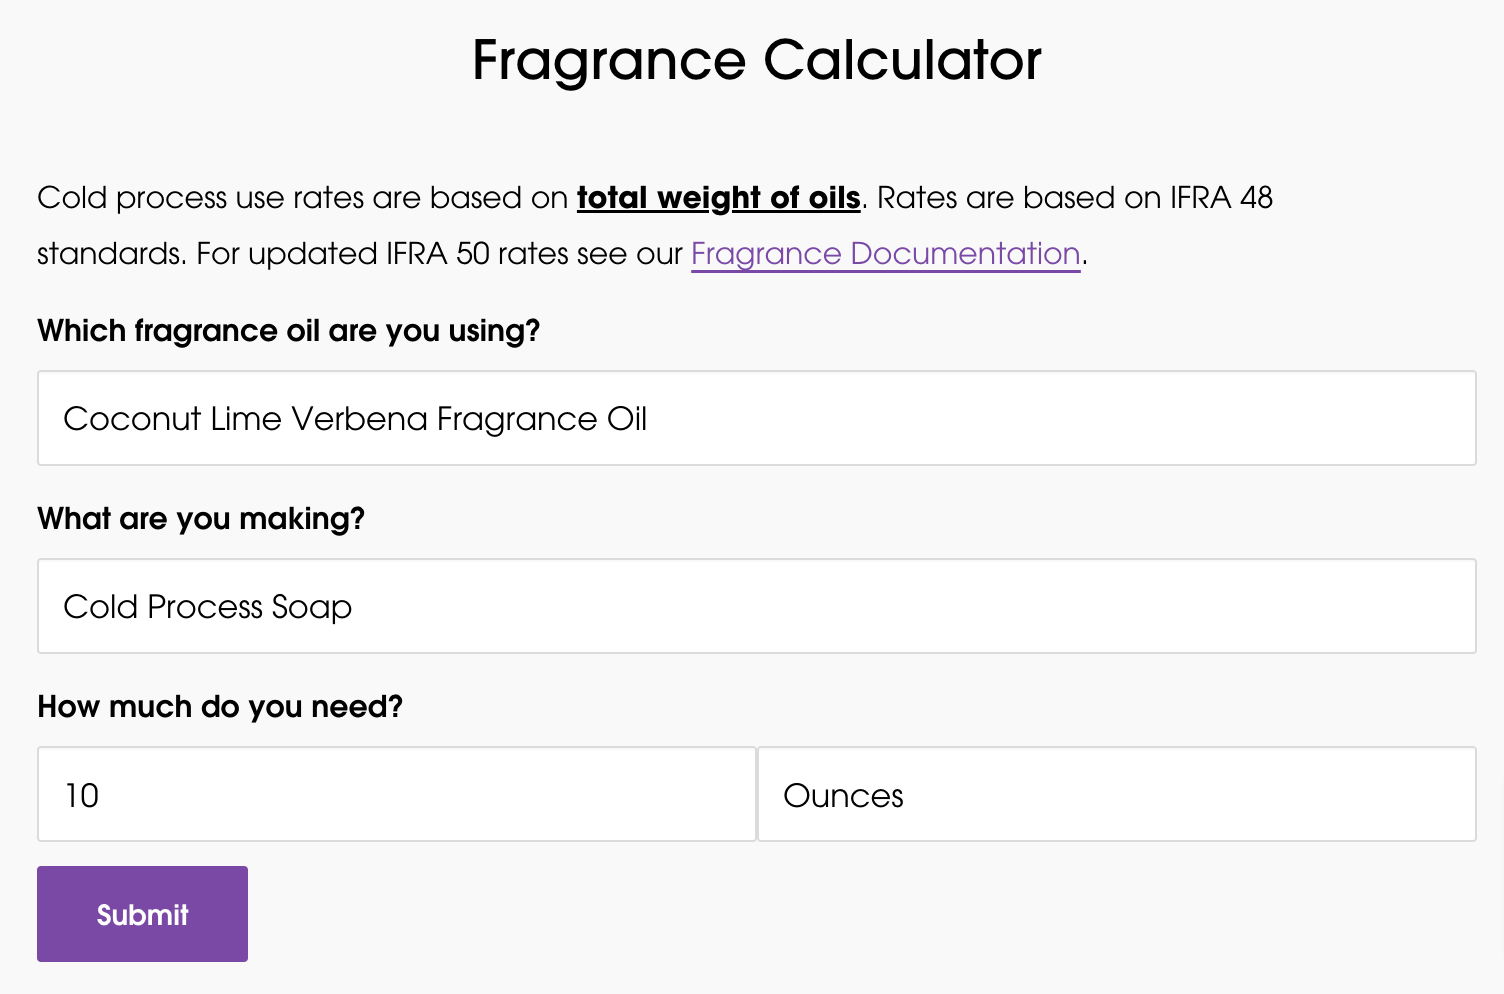 Fragrance Calculator from Nurture Soap